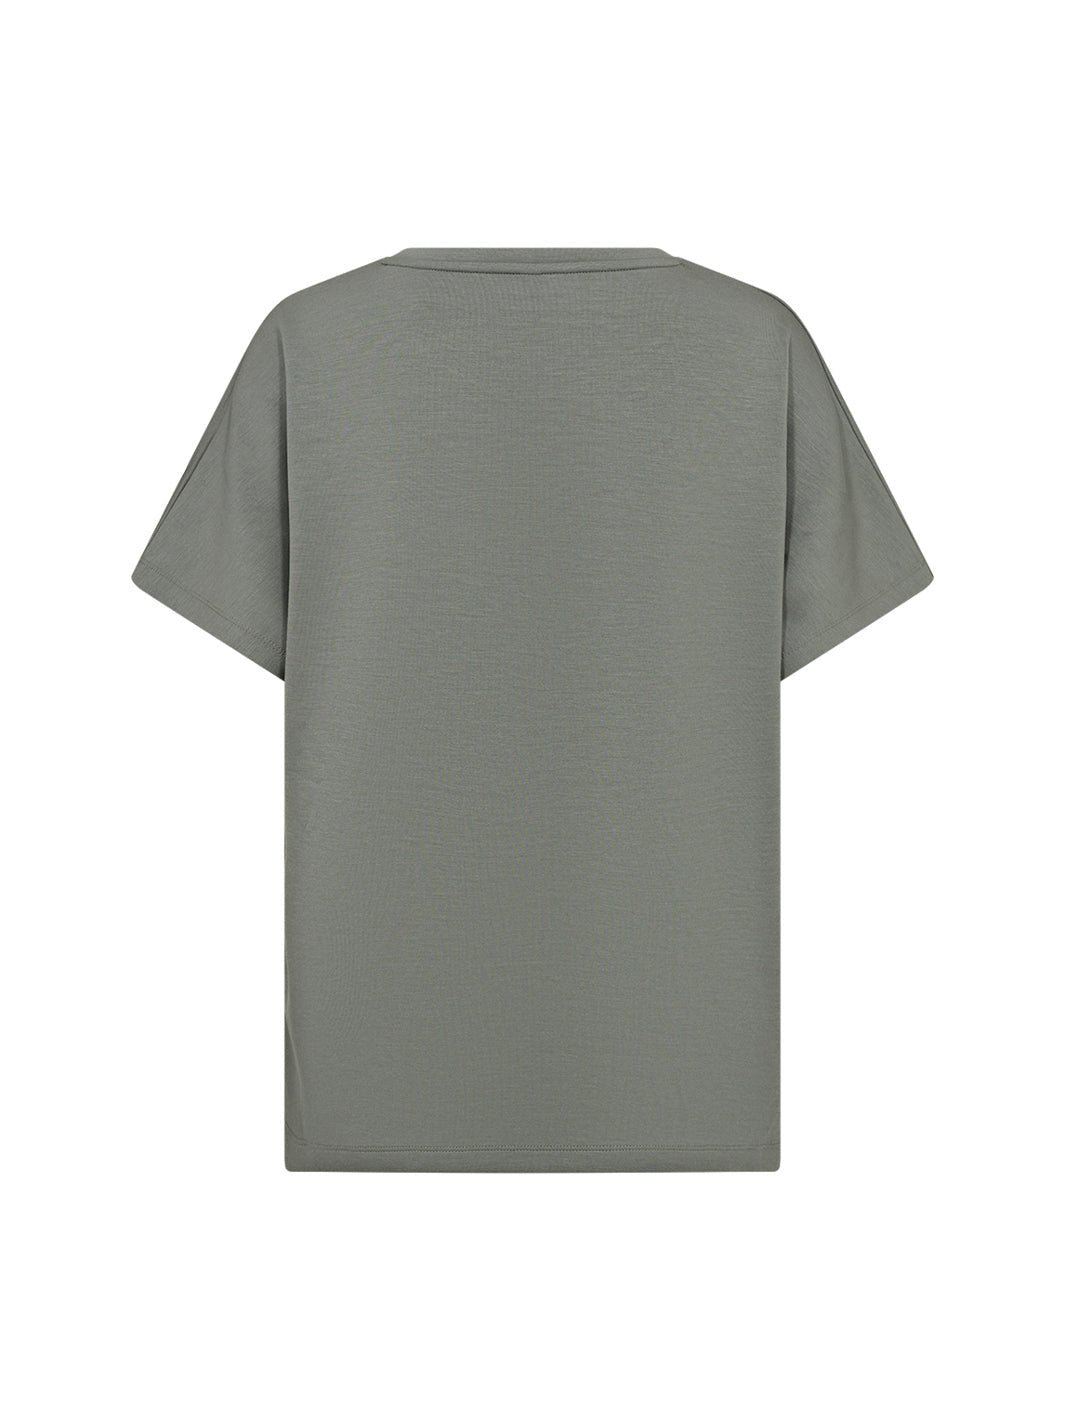 Soya Concept Banu 176 t-shirt dusty olive - Online-Mode